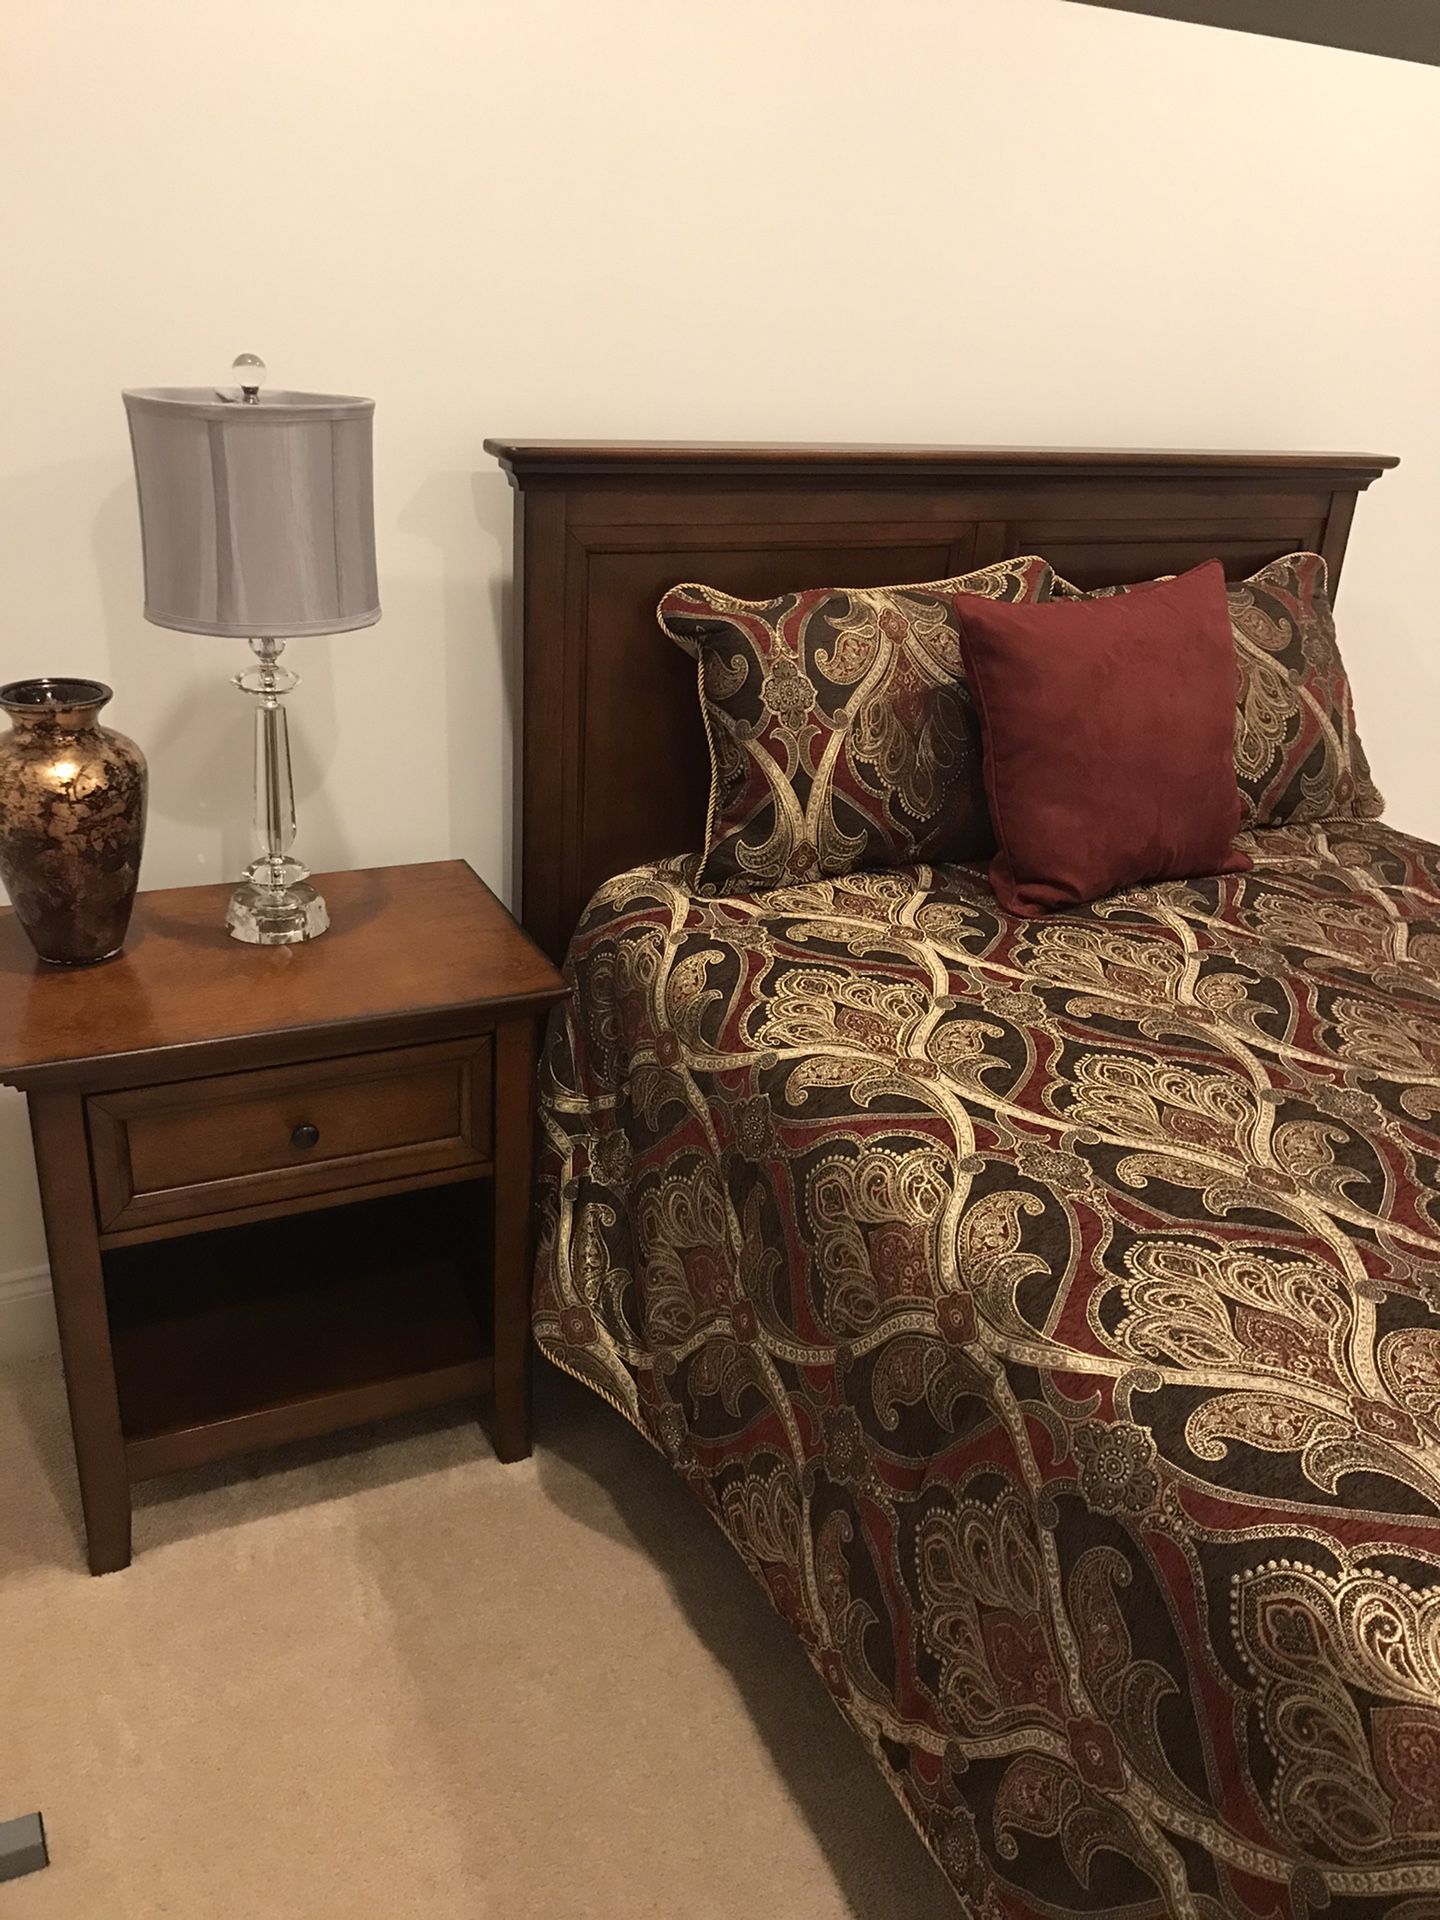 New solid wood bedroom set -50% off